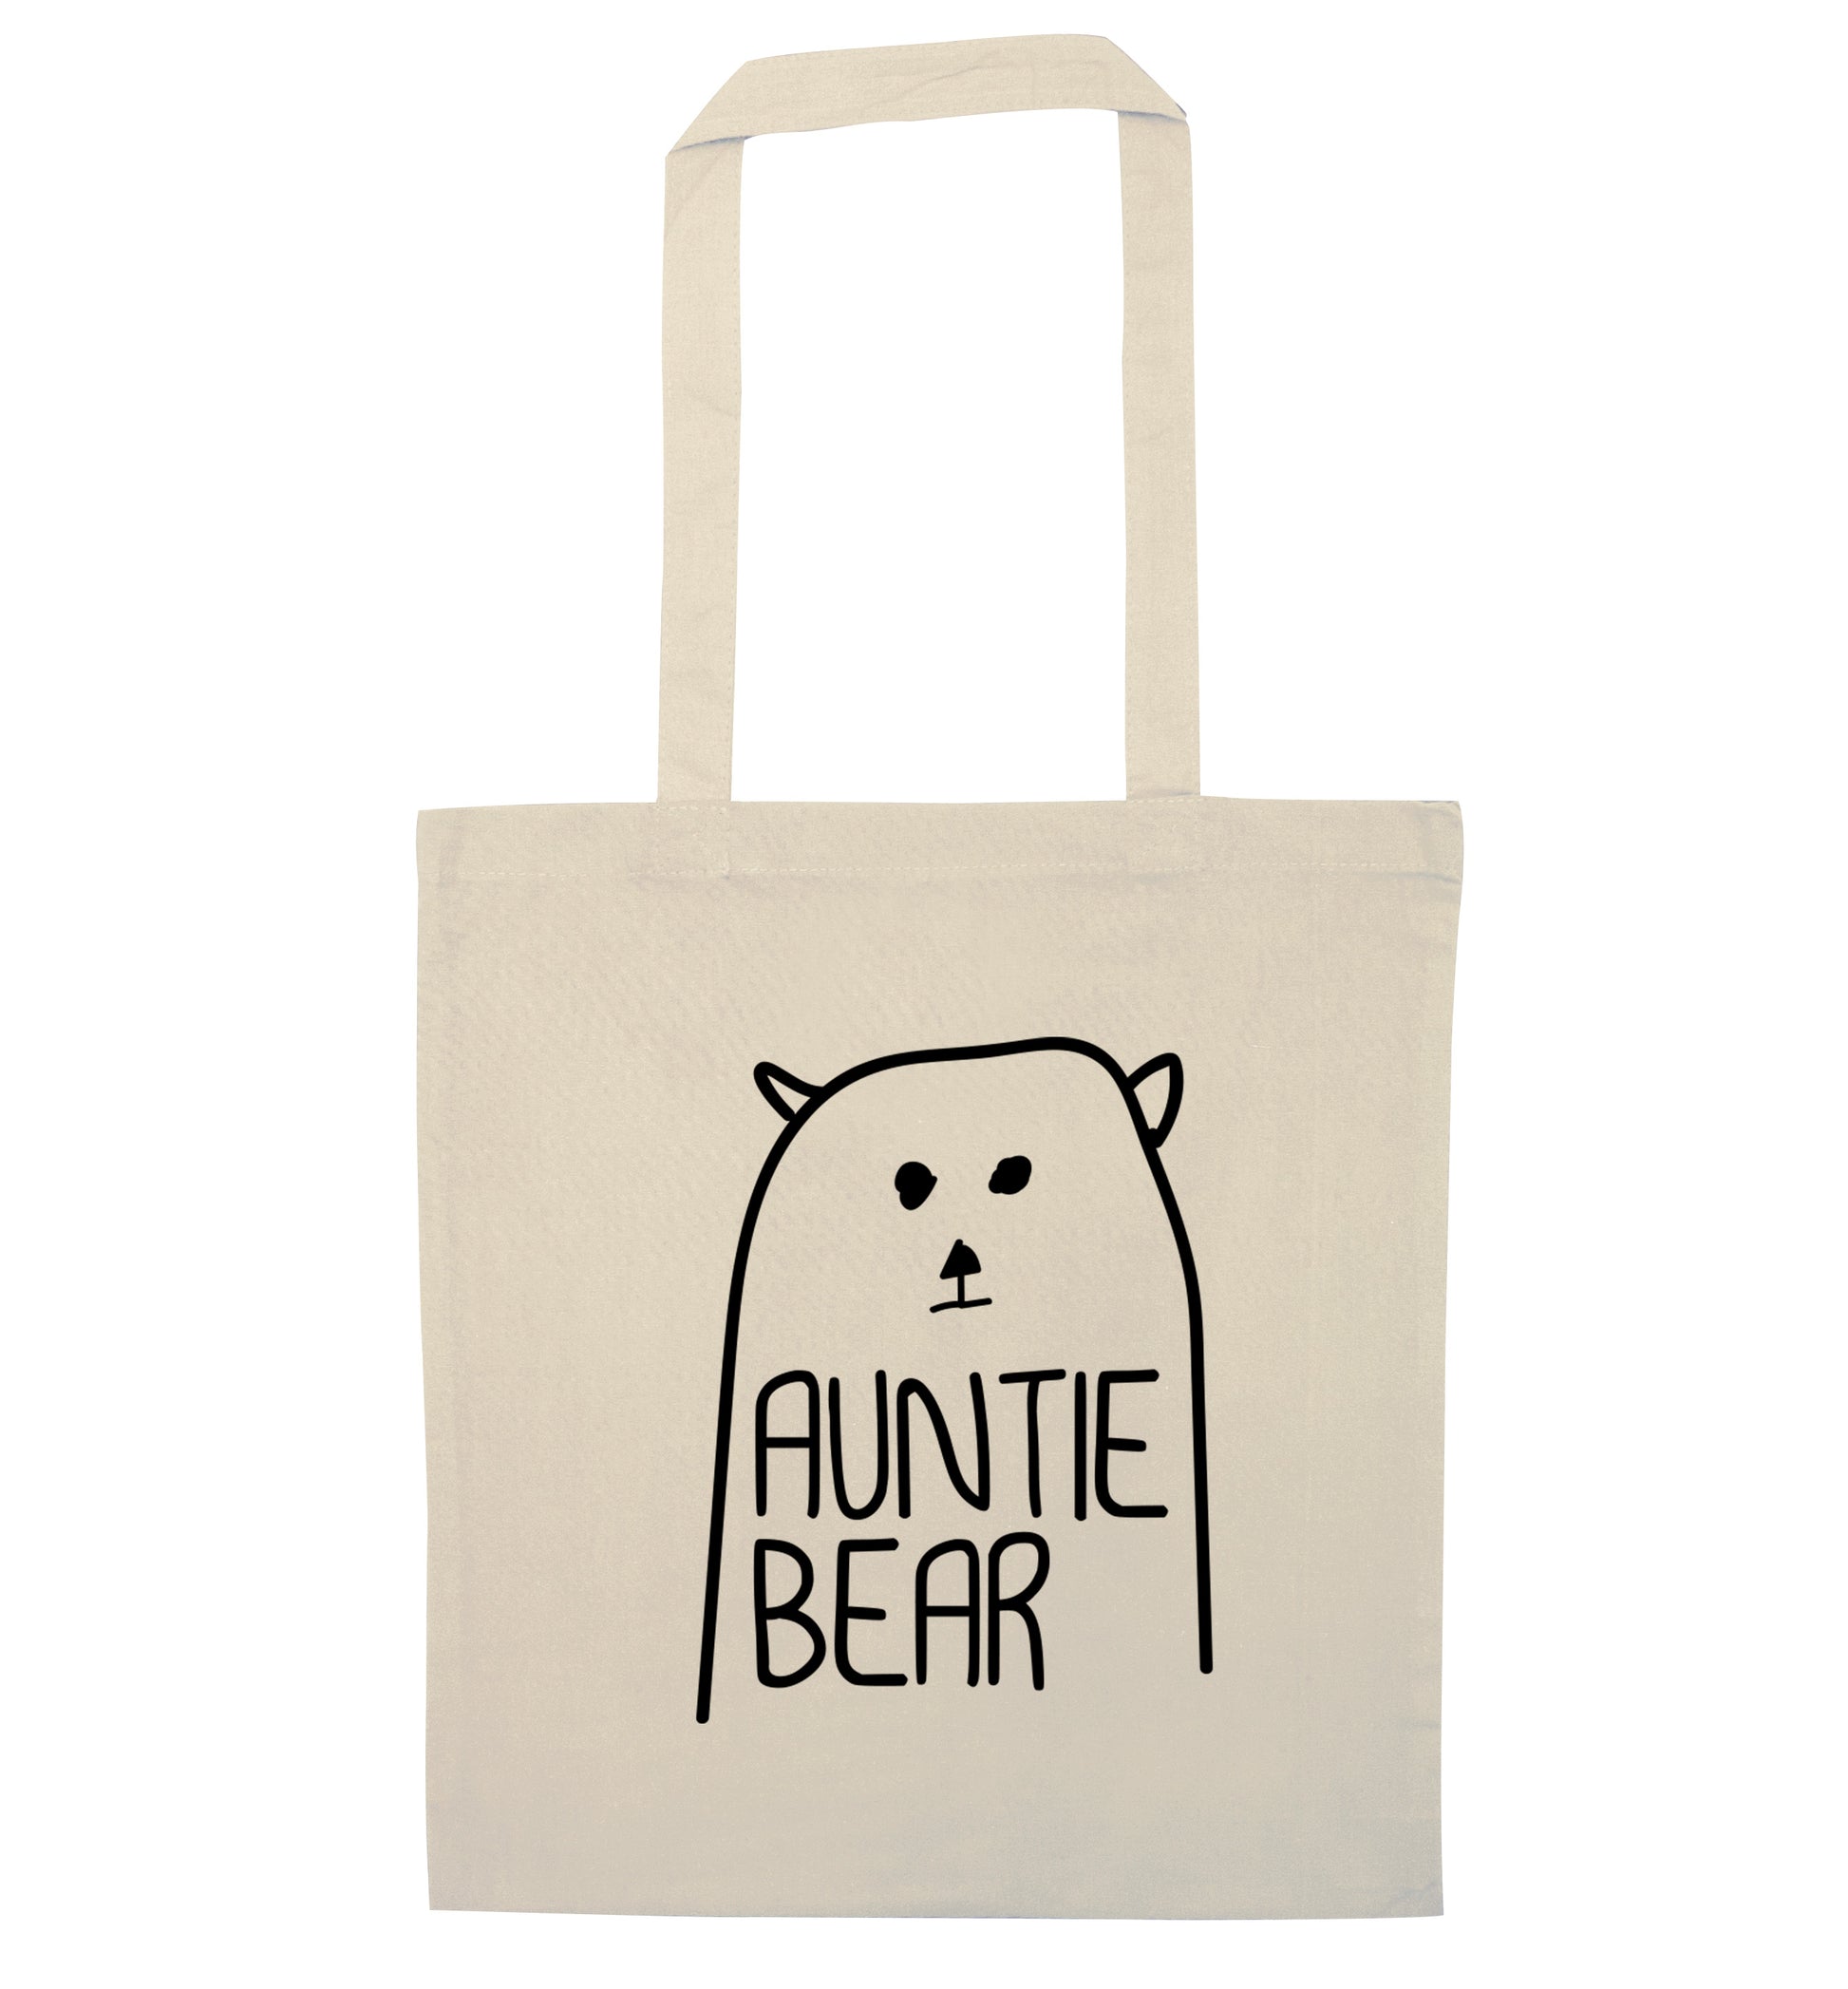 Auntie bear natural tote bag